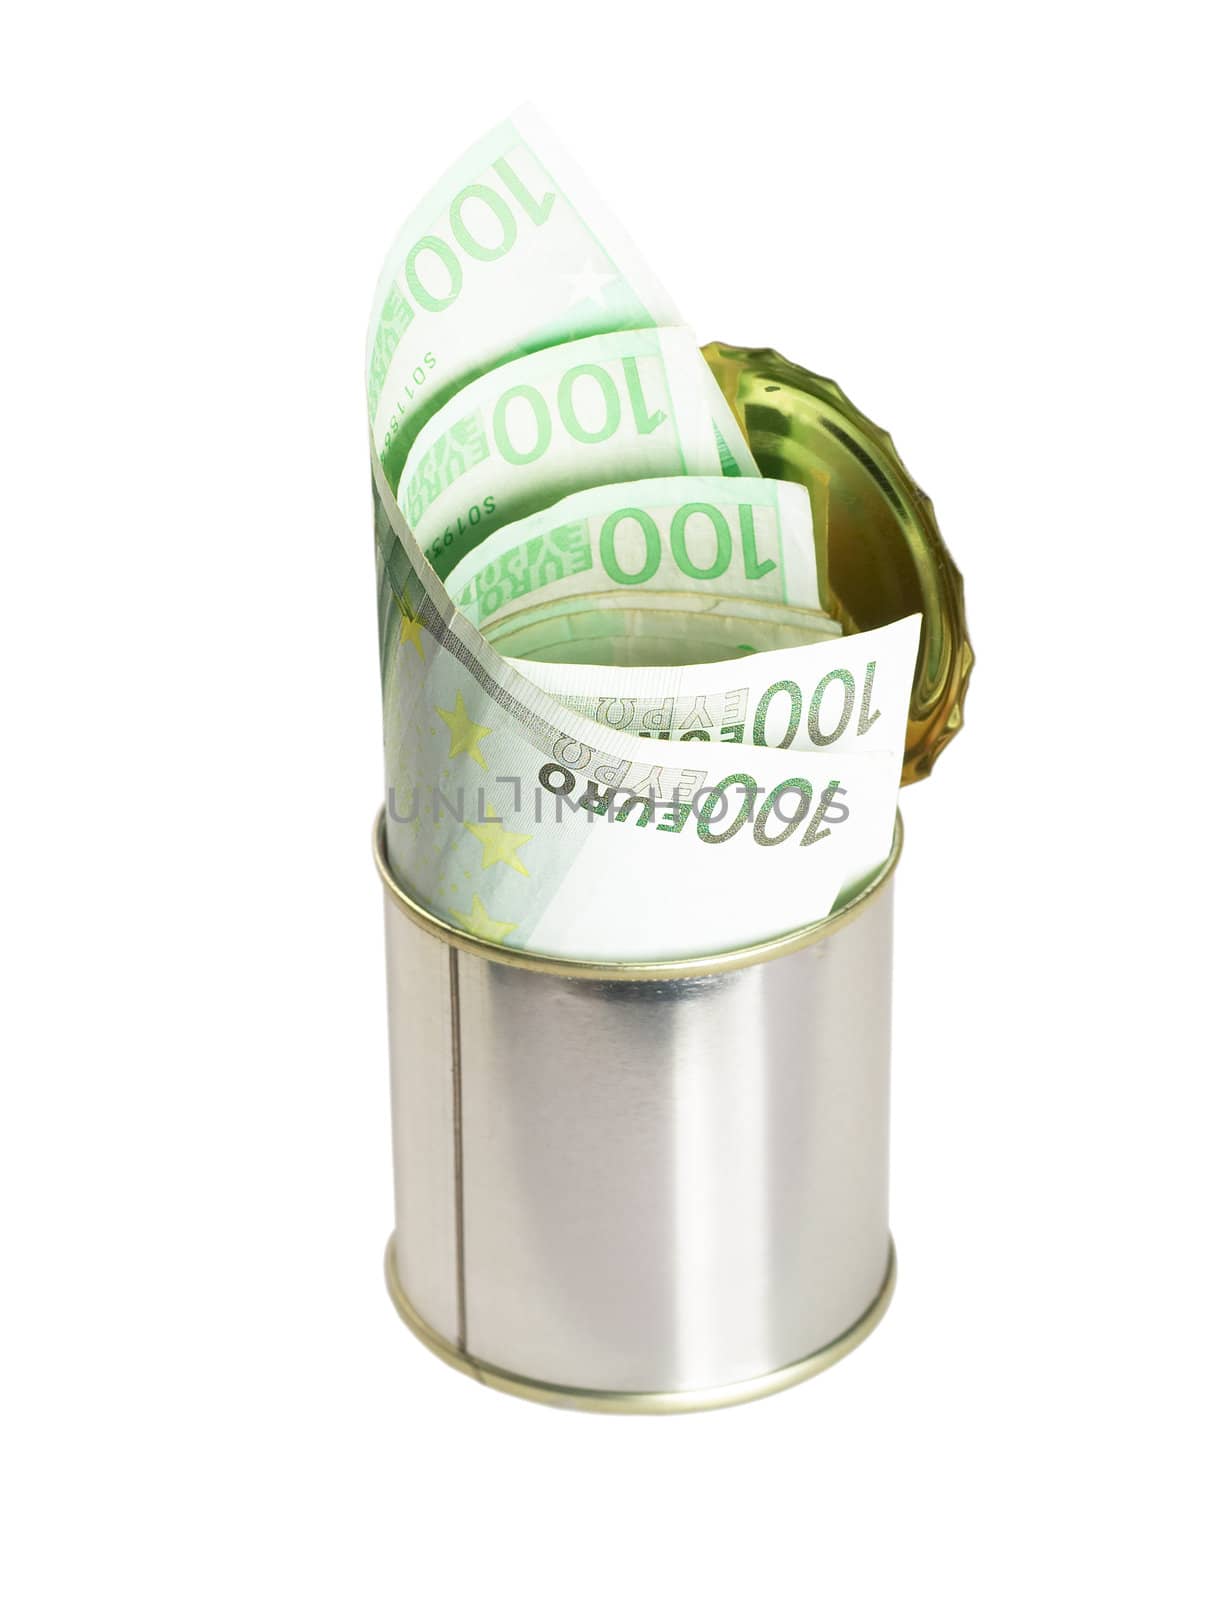 euro bills on a tin can by keko64